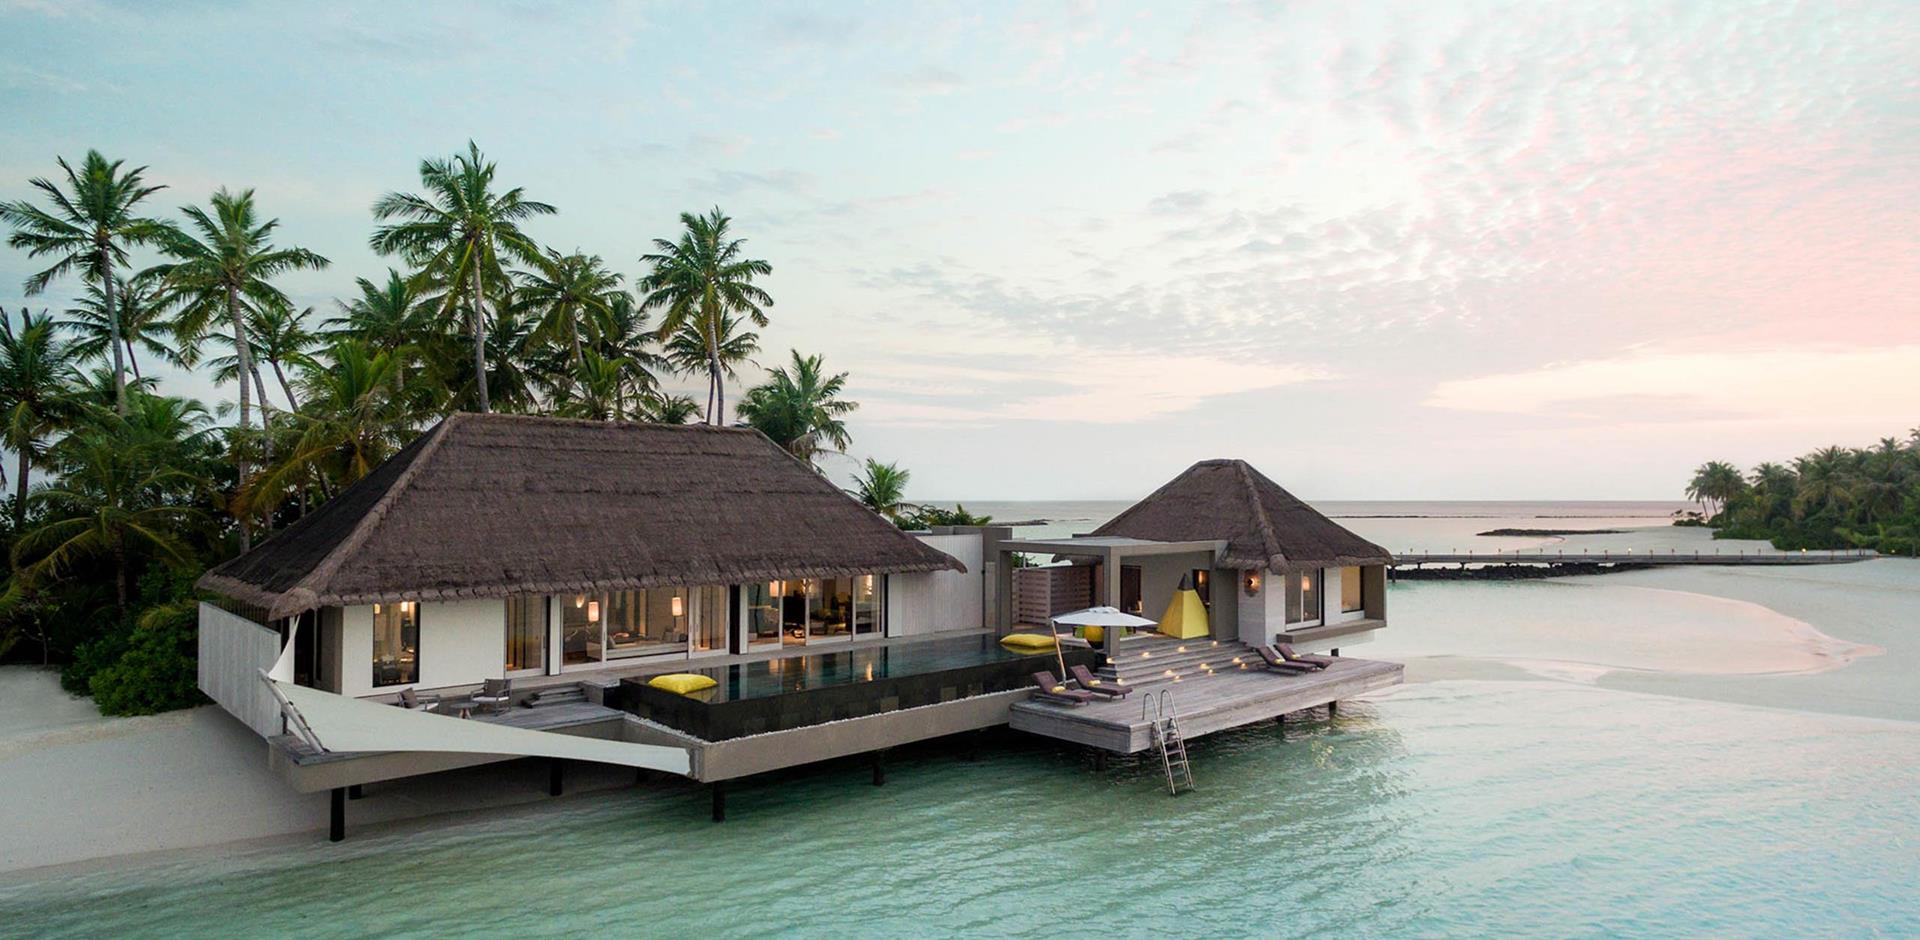 Cheval Blanc Randheli hotel in the Maldives